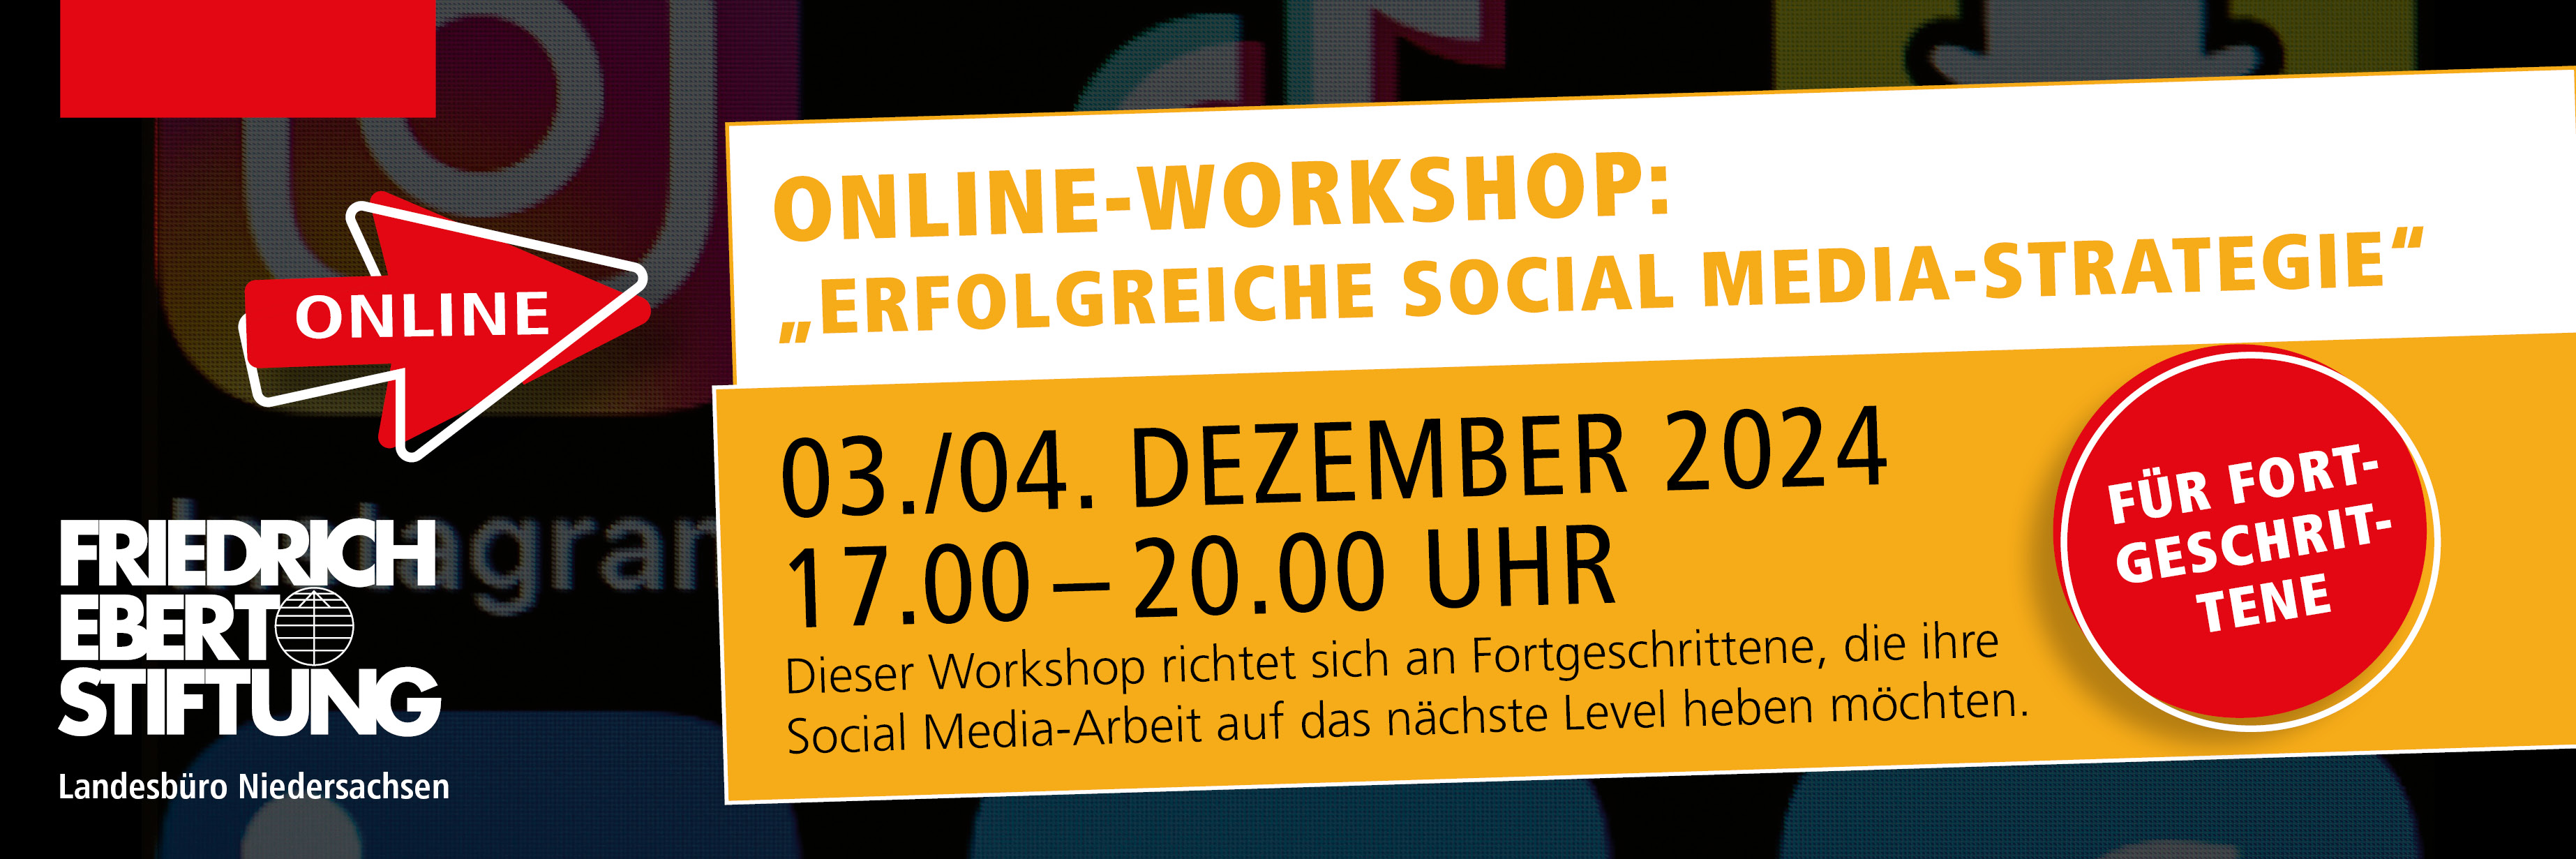 Online-Workshop: "Erfolgreiche Social Media-Strategie"